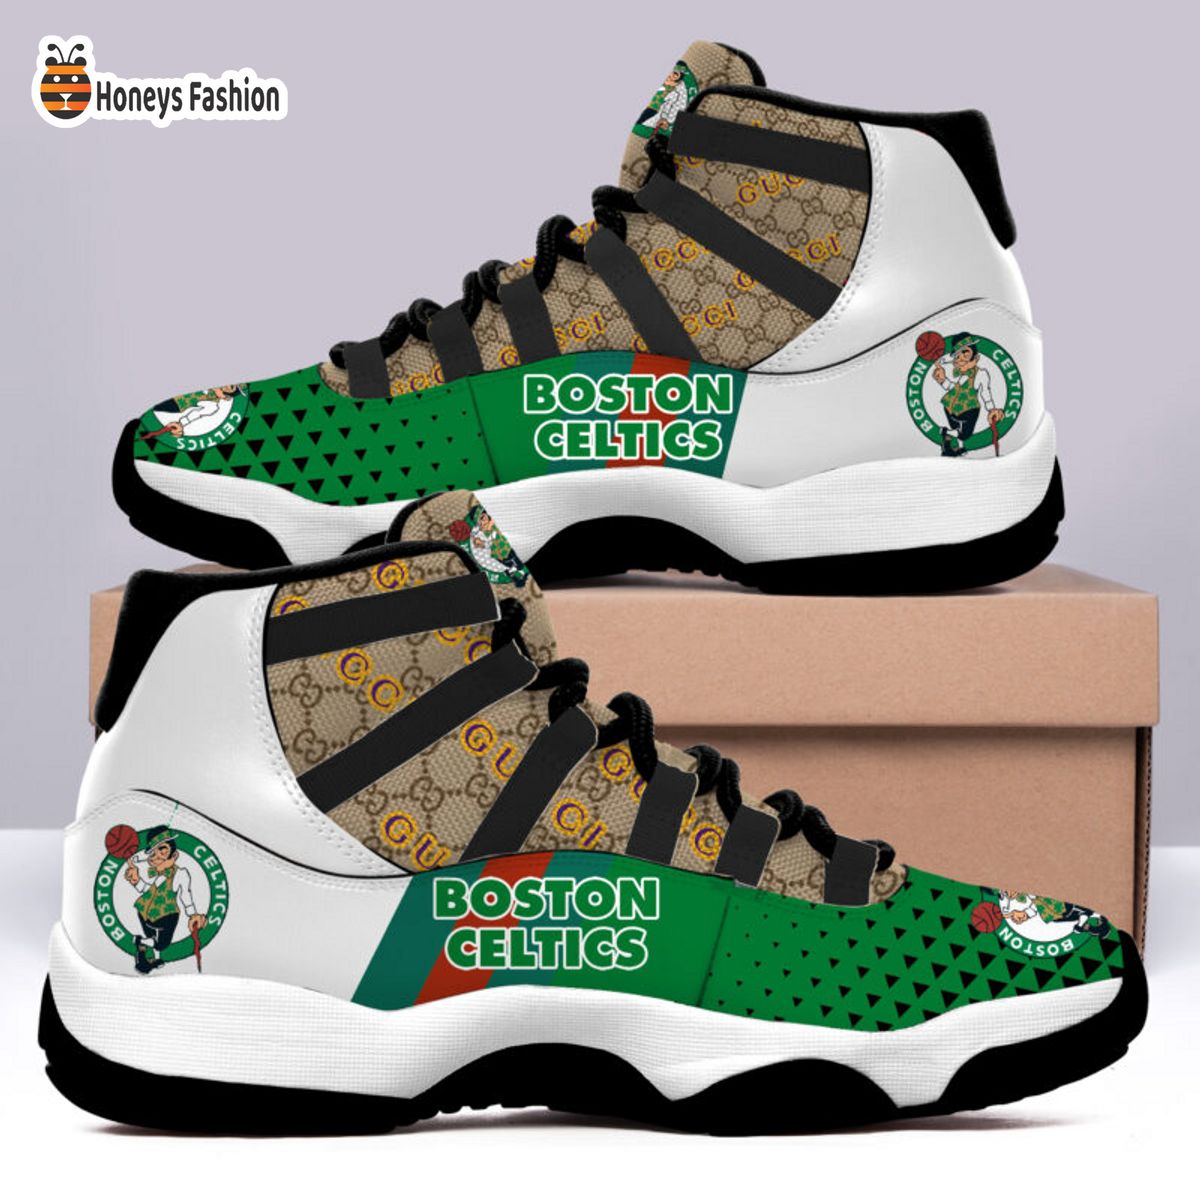 Boston Celtics x Gucci Air Jordan 11 Sneaker